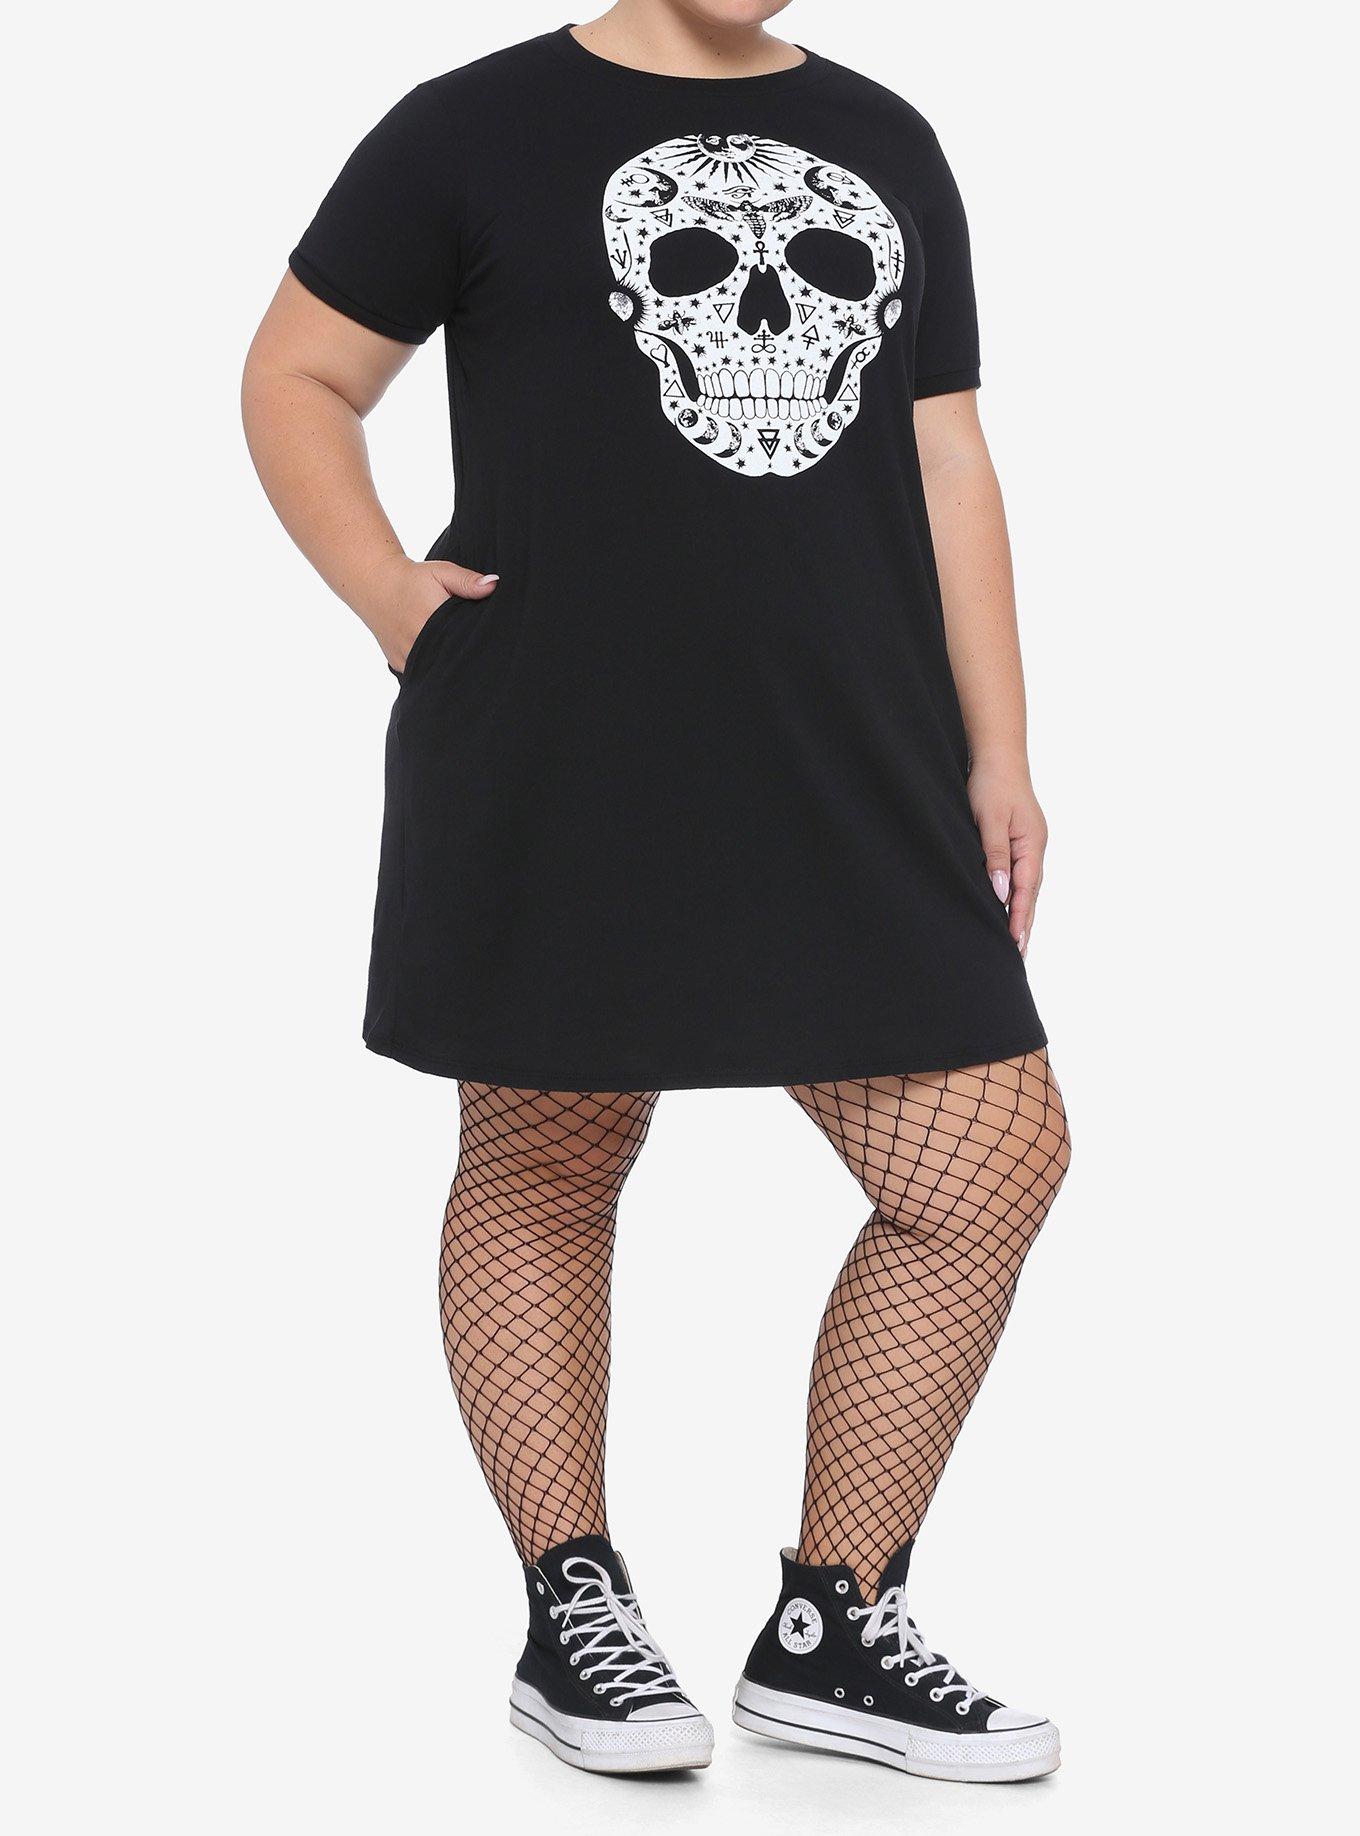 Symbols Skull T-Shirt Dress Plus Size, BURGUNDY, alternate